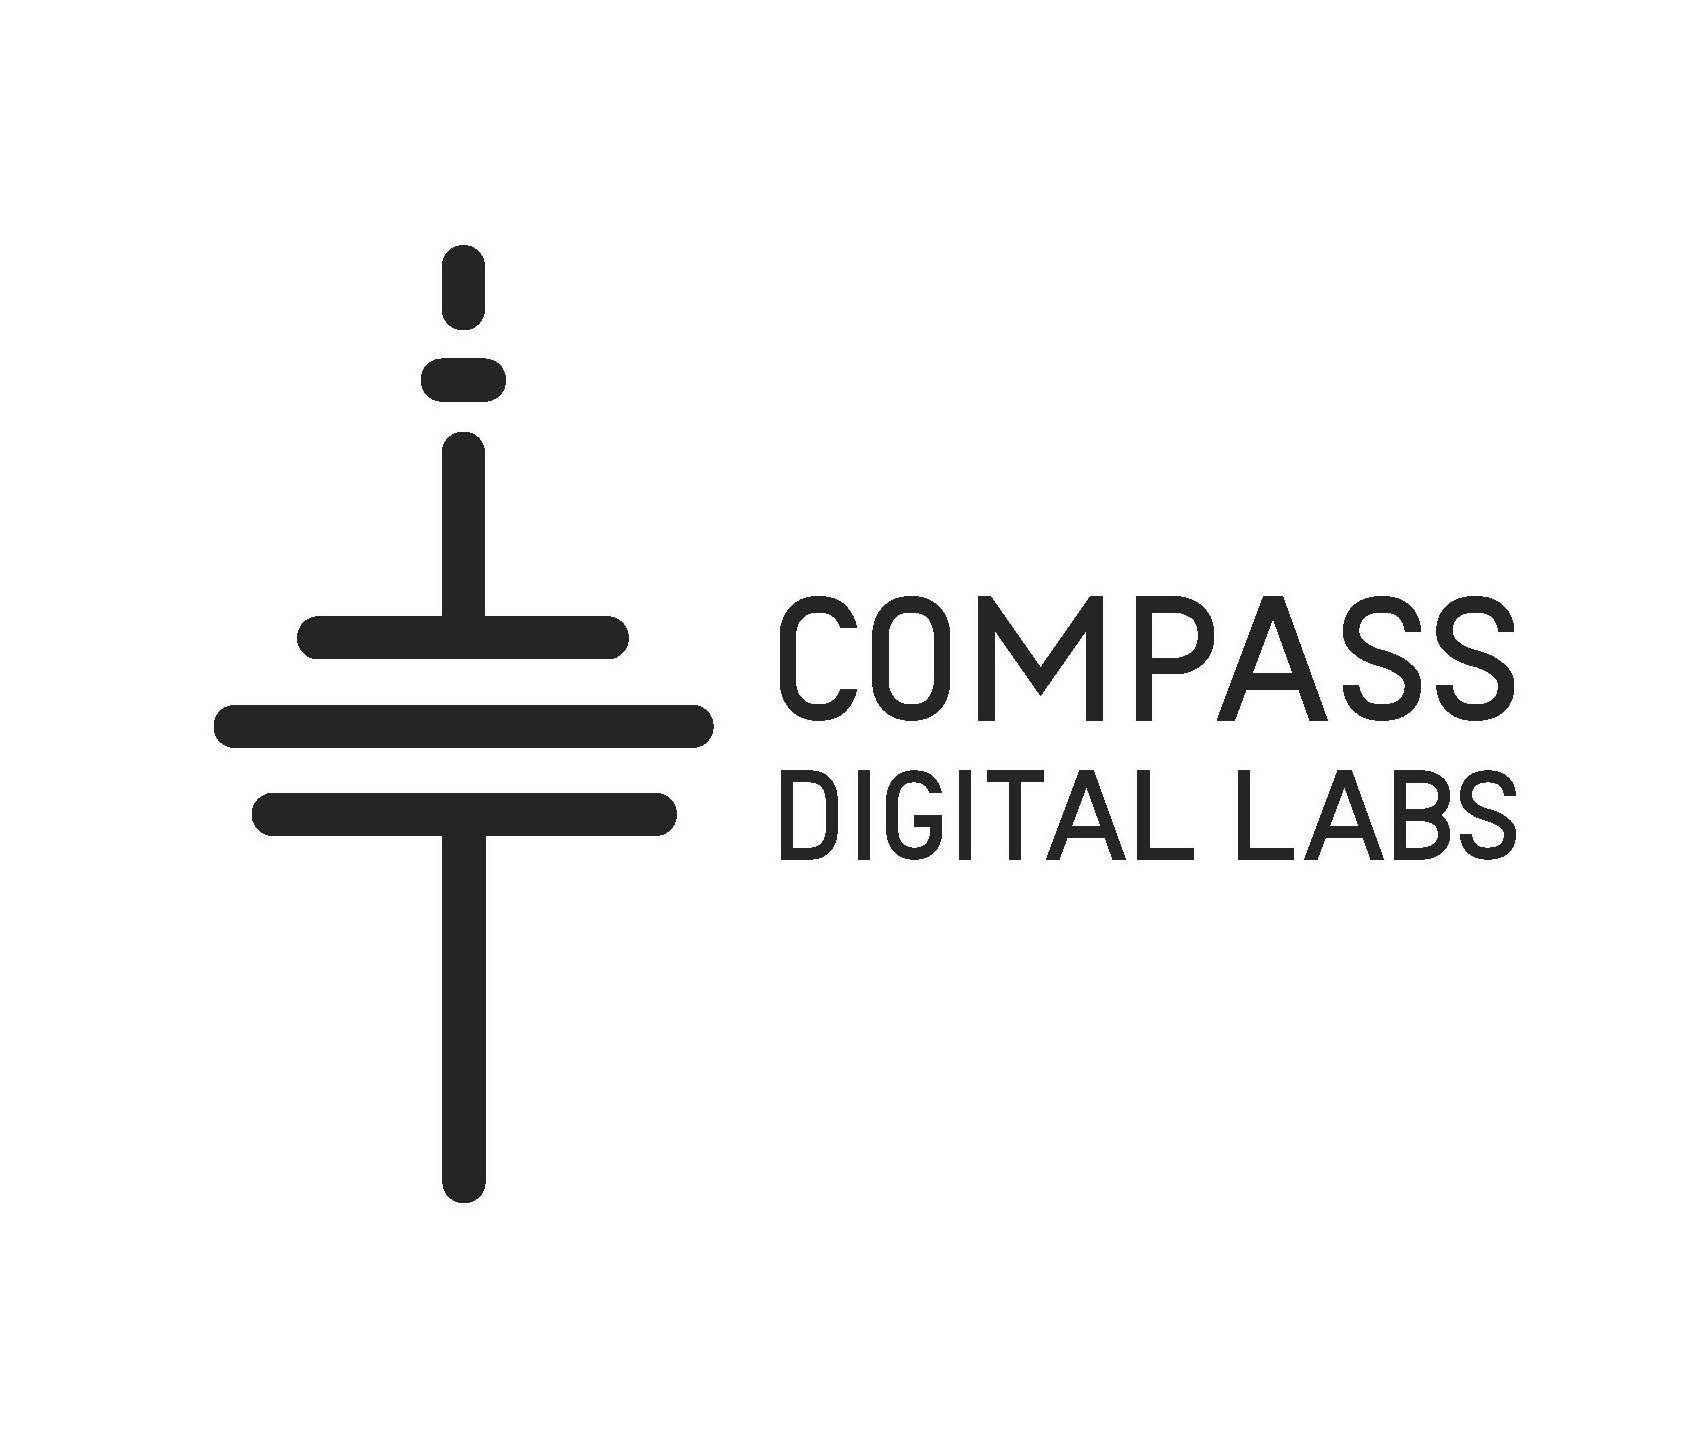 COMPASS DIGITAL LABS